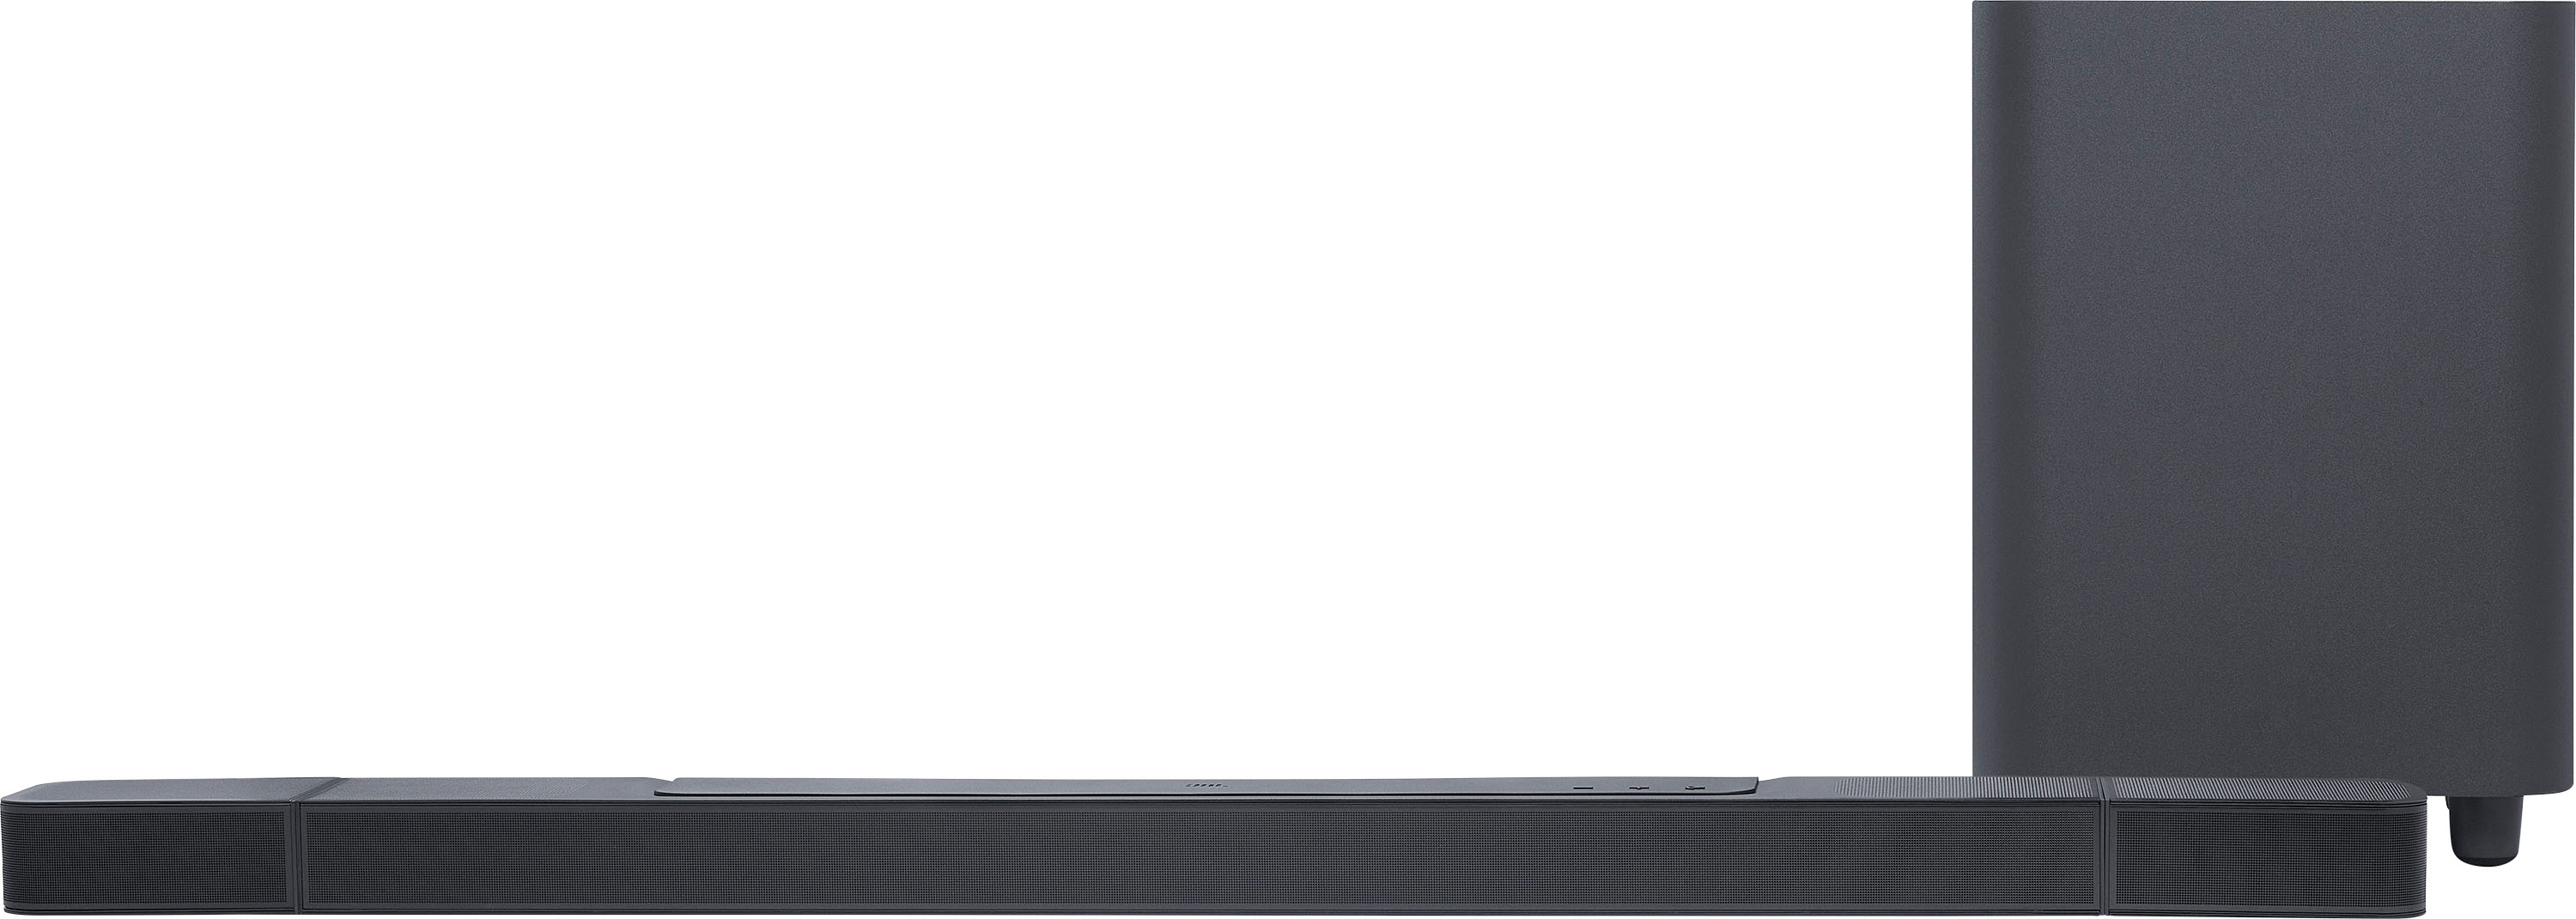 JBL BAR 1000 7.1.4-channel soundbar with detachable surround